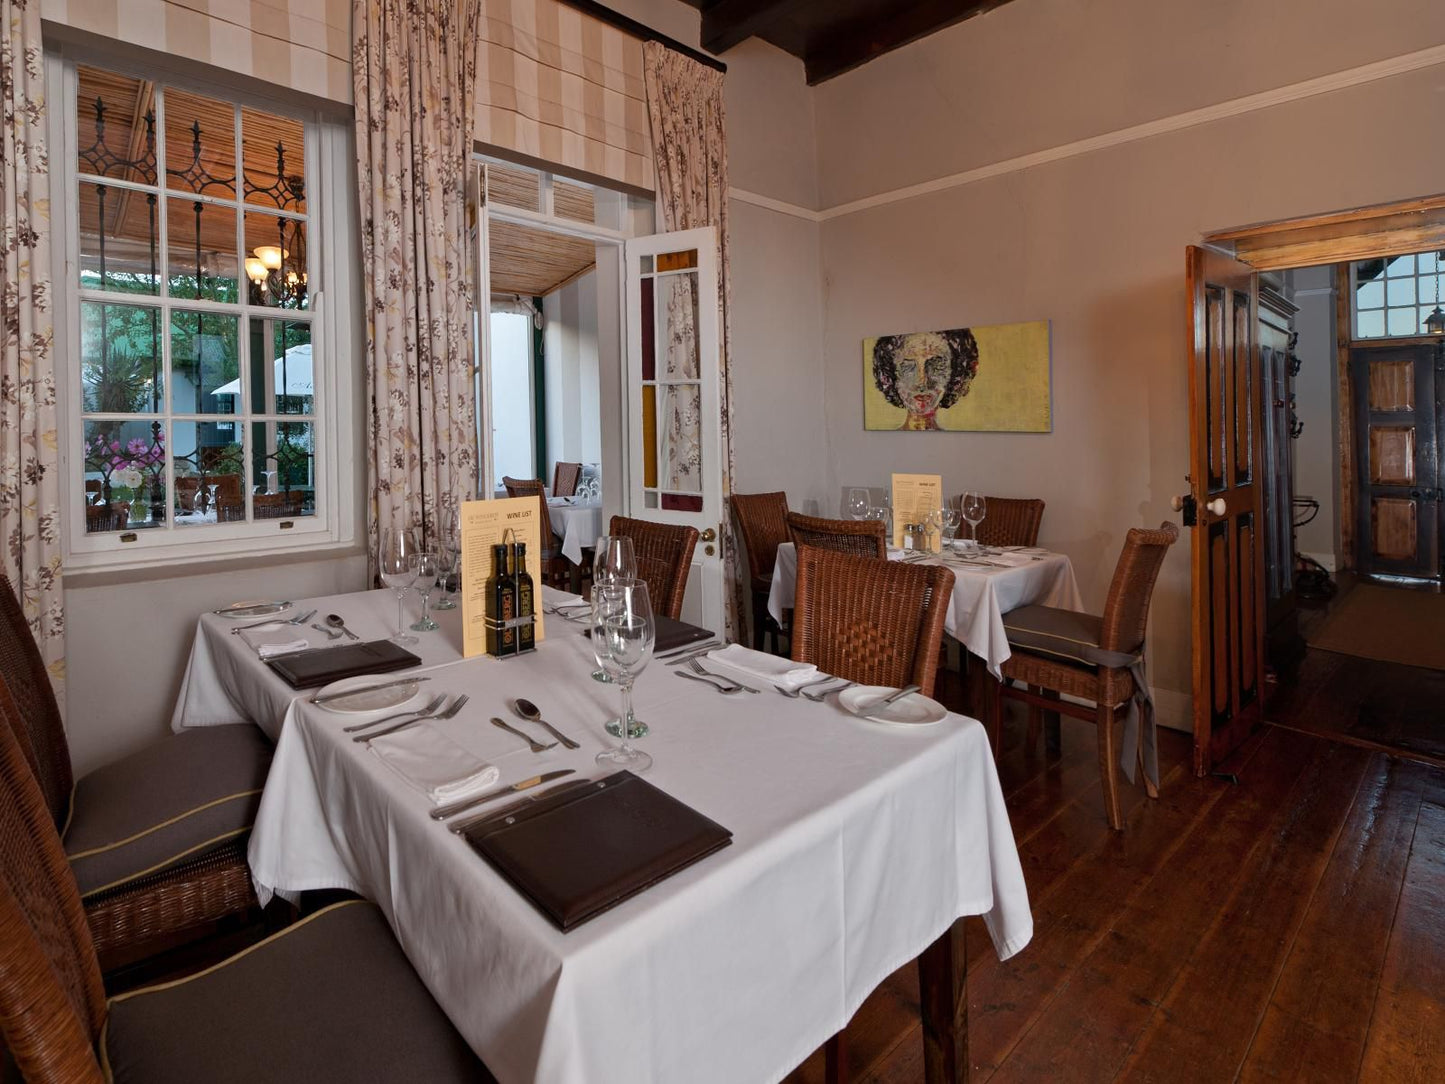 De Doornkraal Historic Country House Riversdale Western Cape South Africa Restaurant, Bar